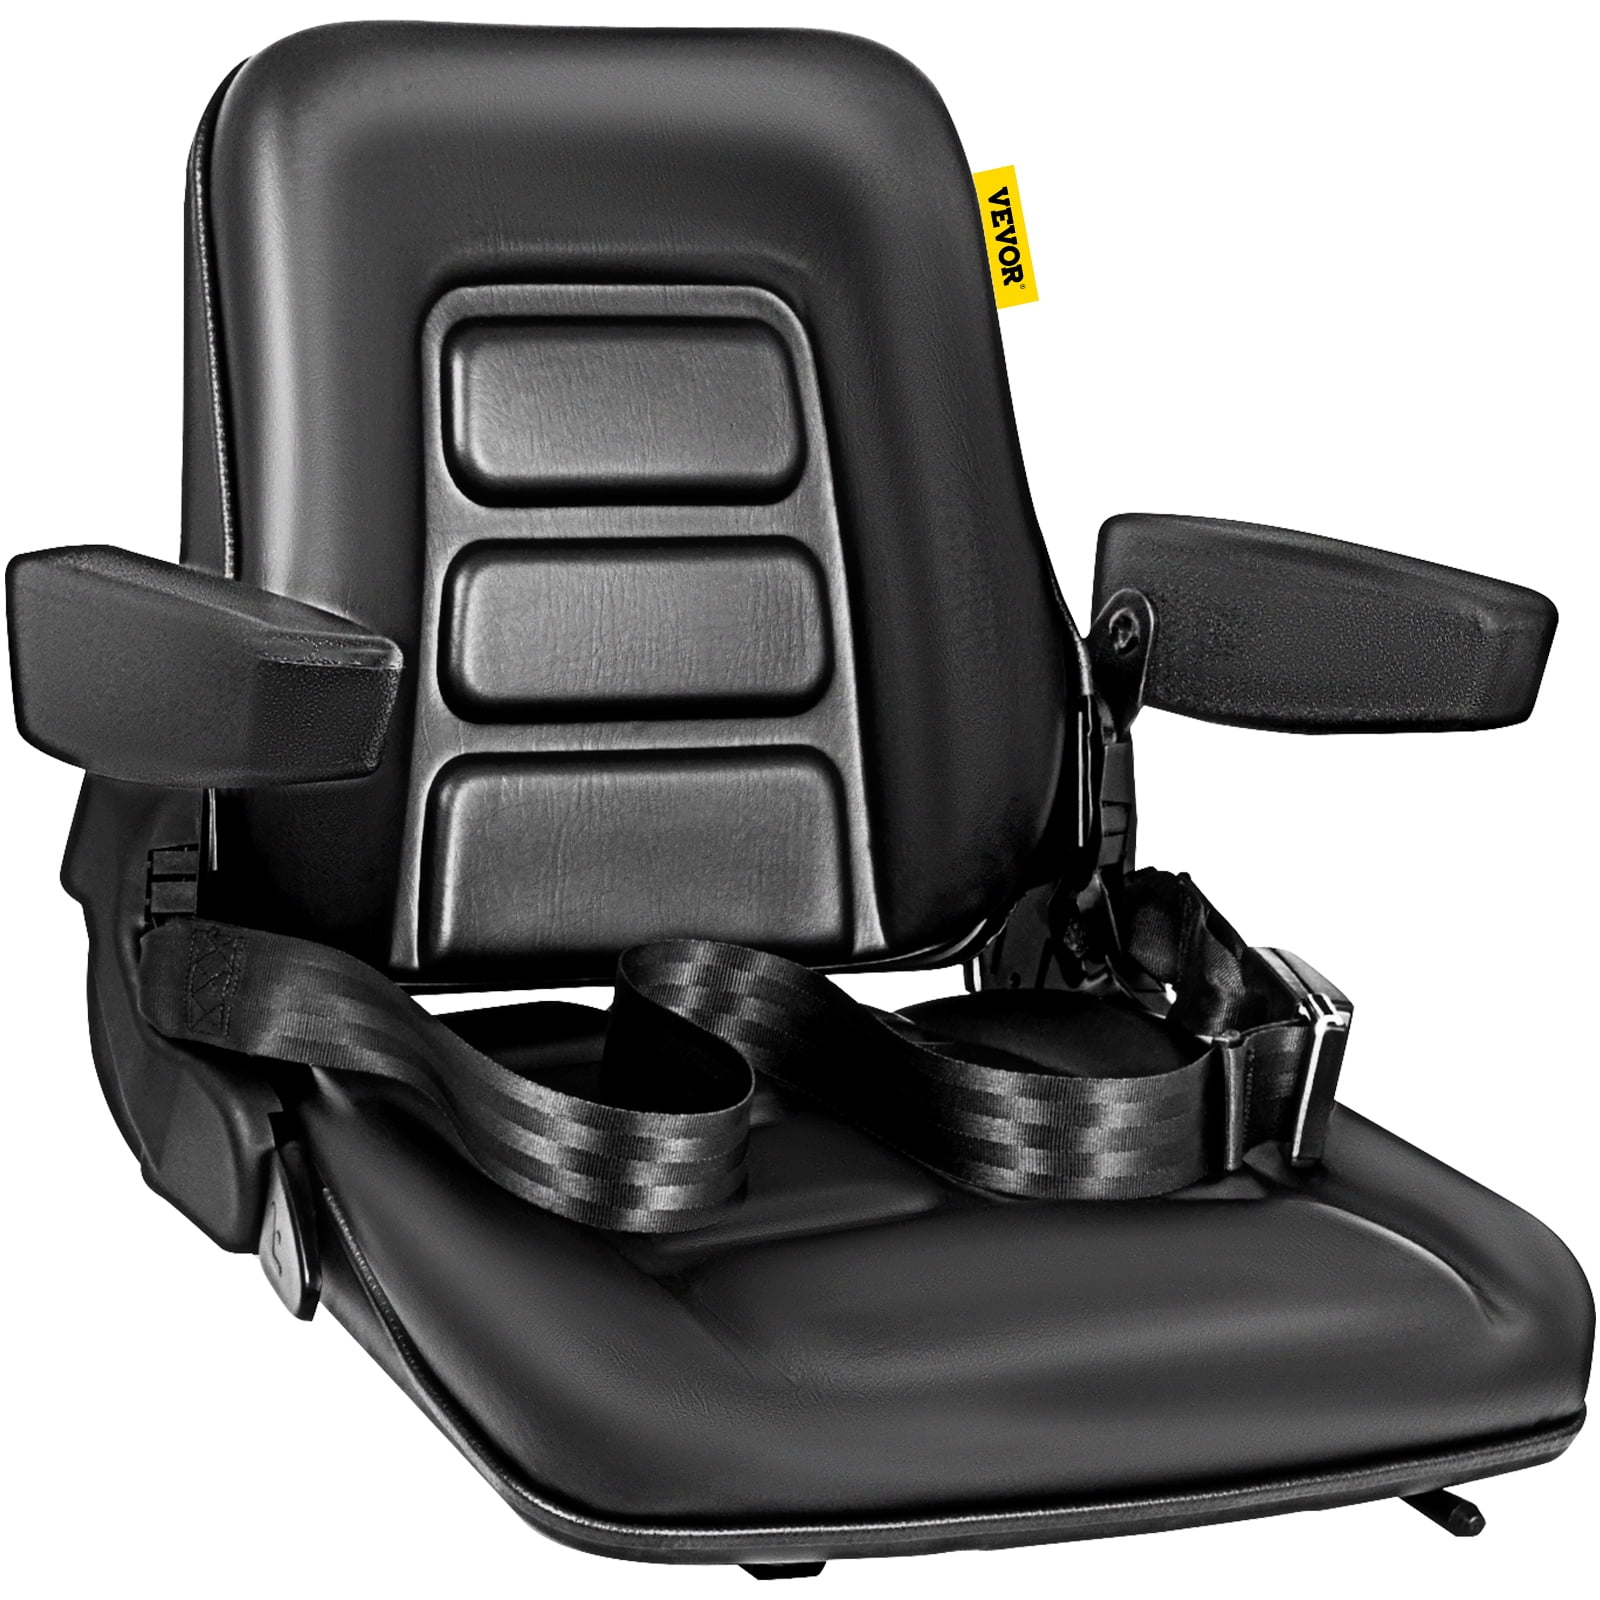 Universal Fold Down Forklift Seat with Adjustable Angle Back,Armrest,Micro Switch and Slide for Tractor,Excavator Skid Loader Backhoe Dozer Telehandler ZTR’s 